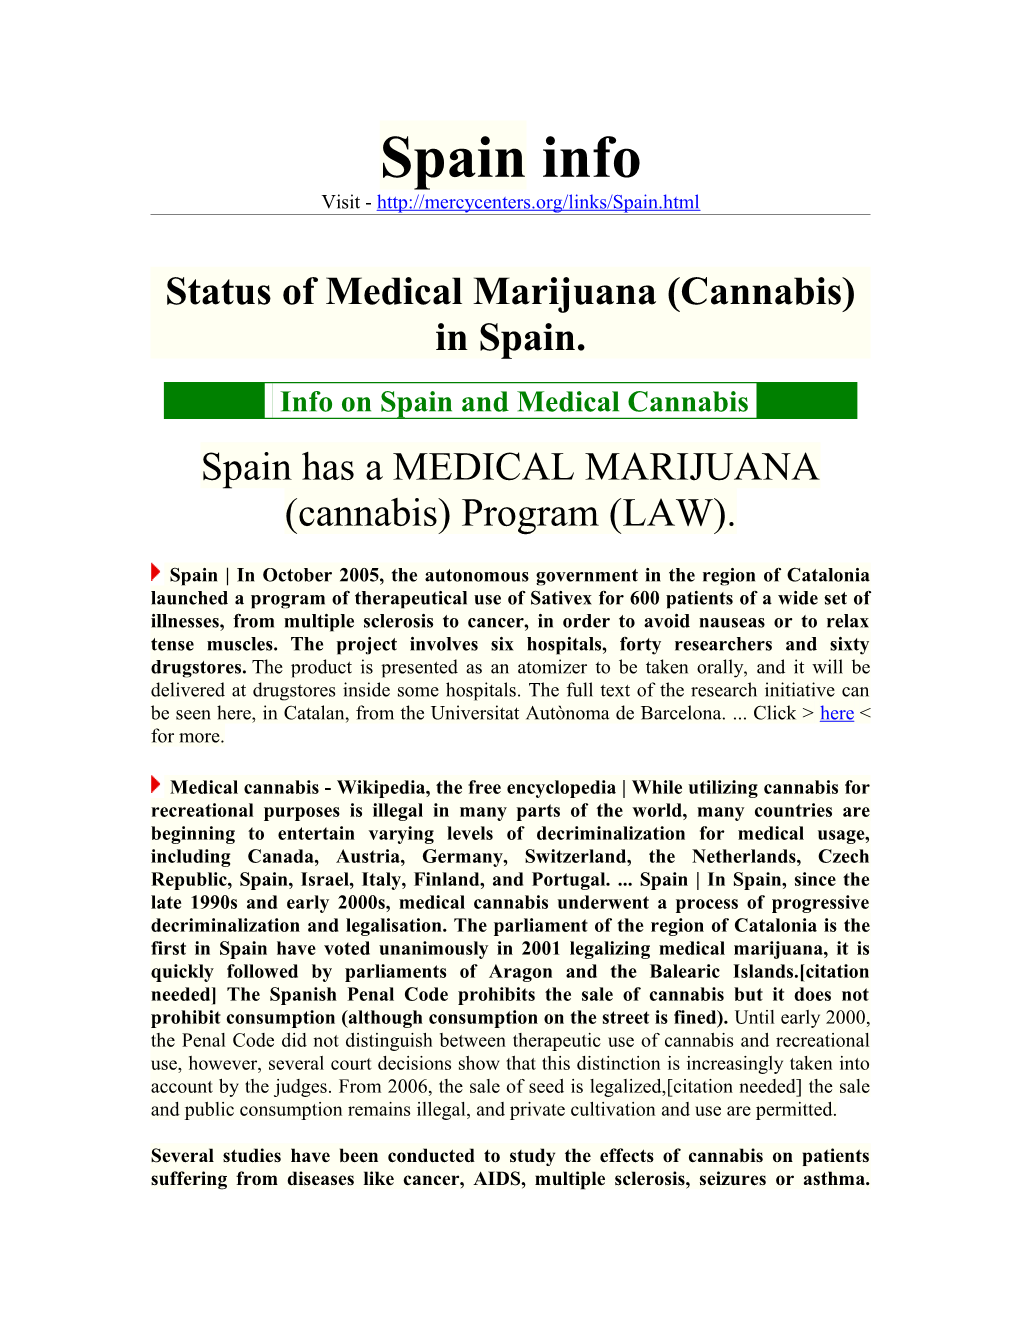 Status of Medical Marijuana (Cannabis) in Spain